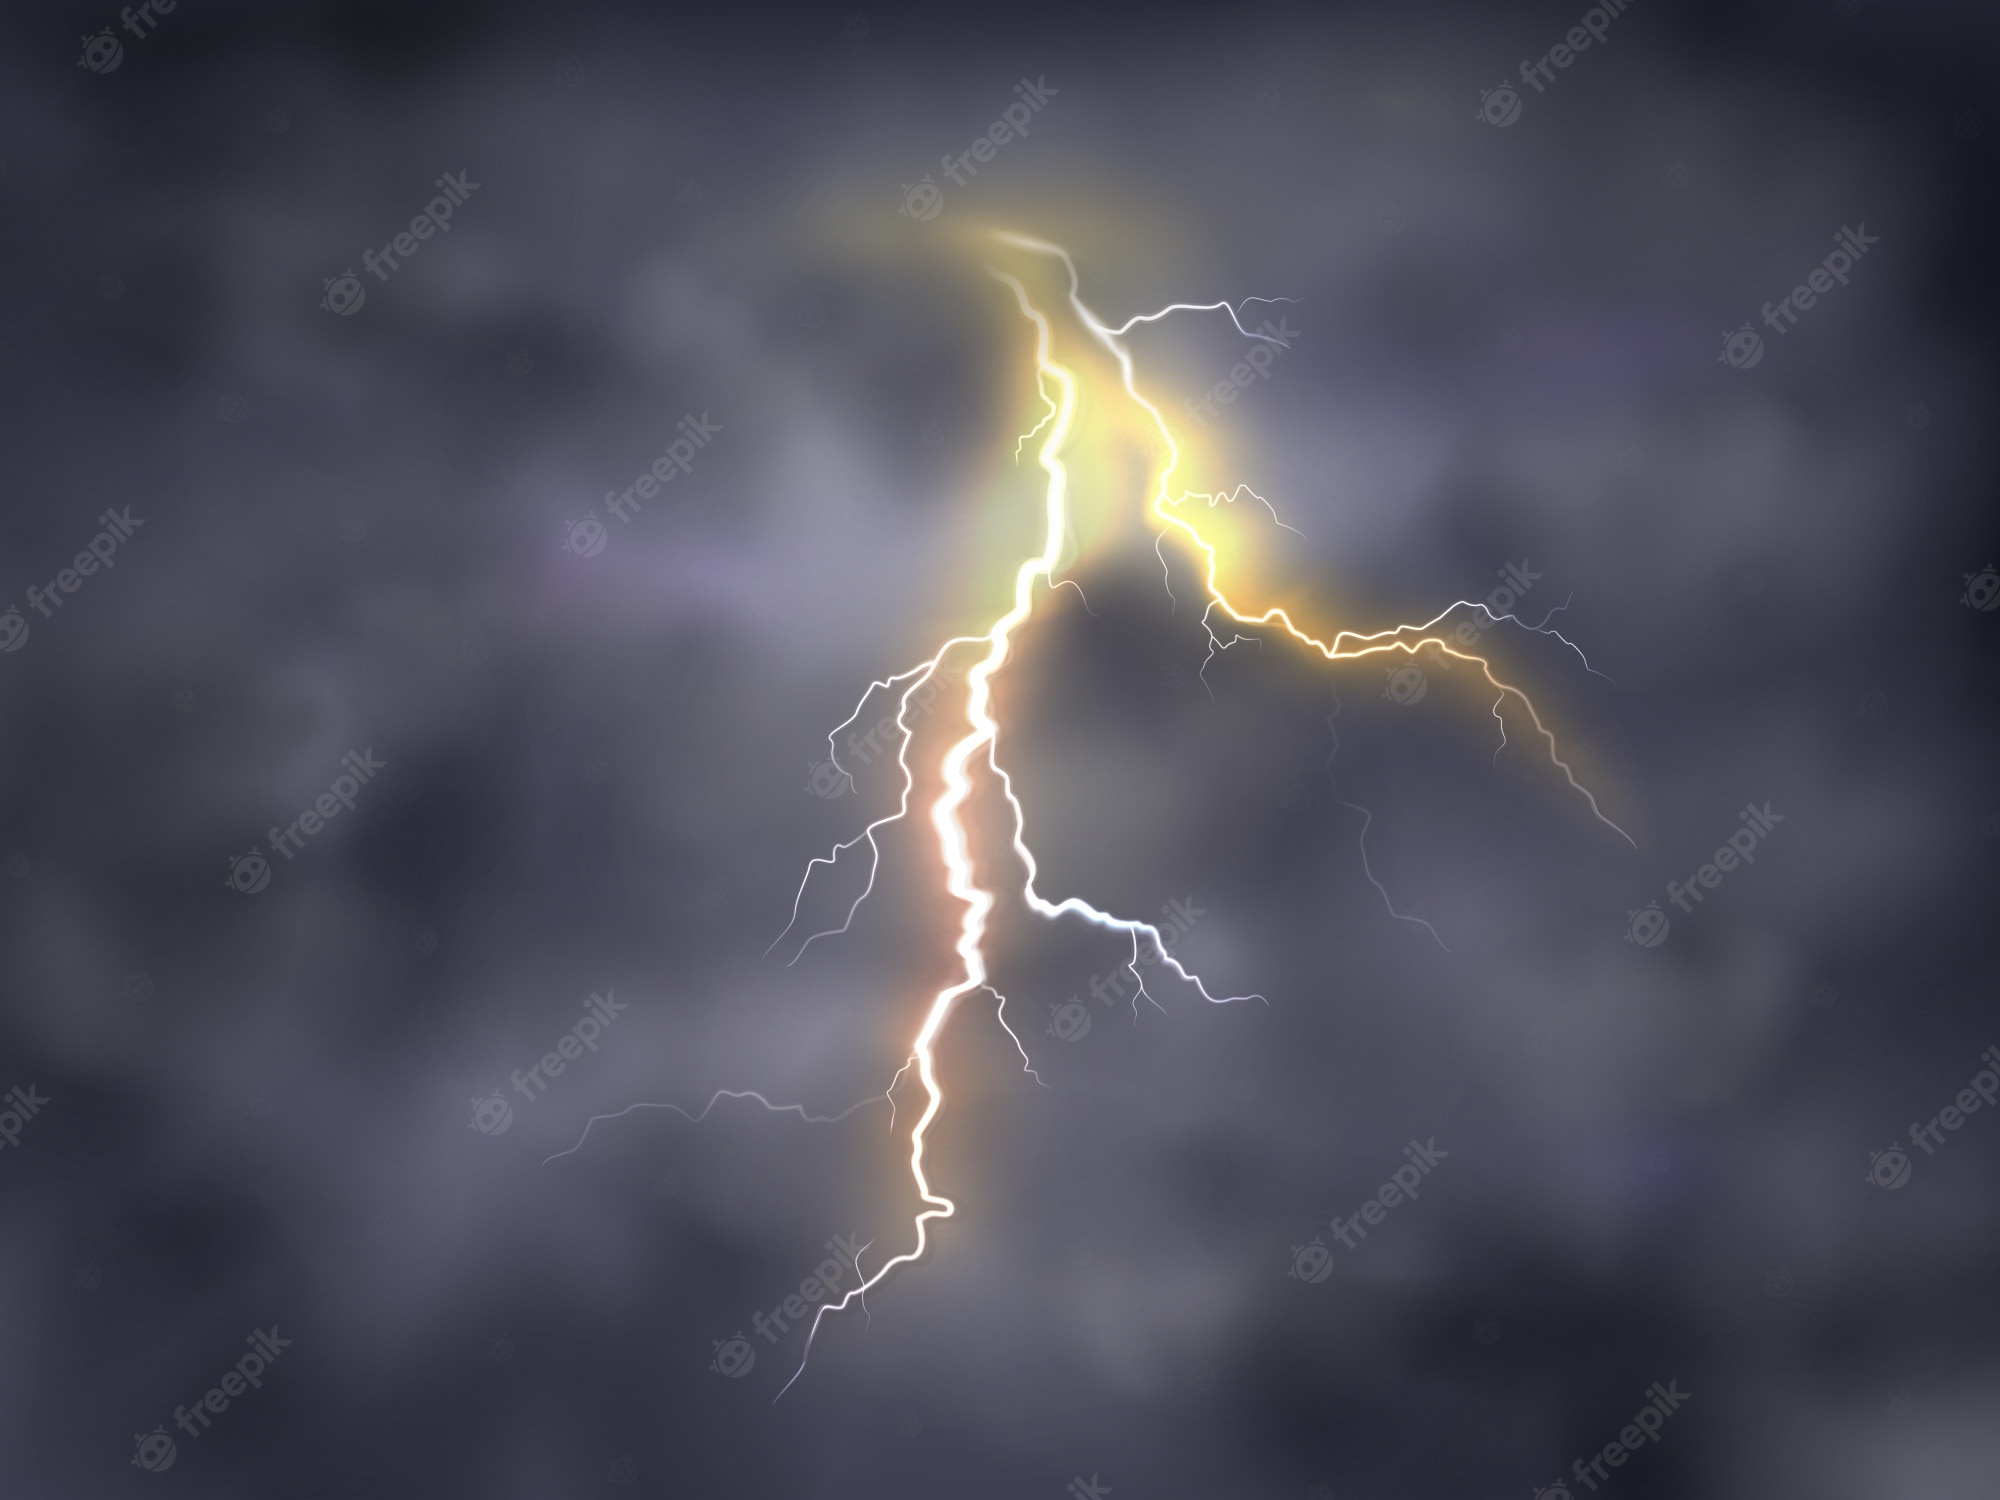 Lighting Storm Background